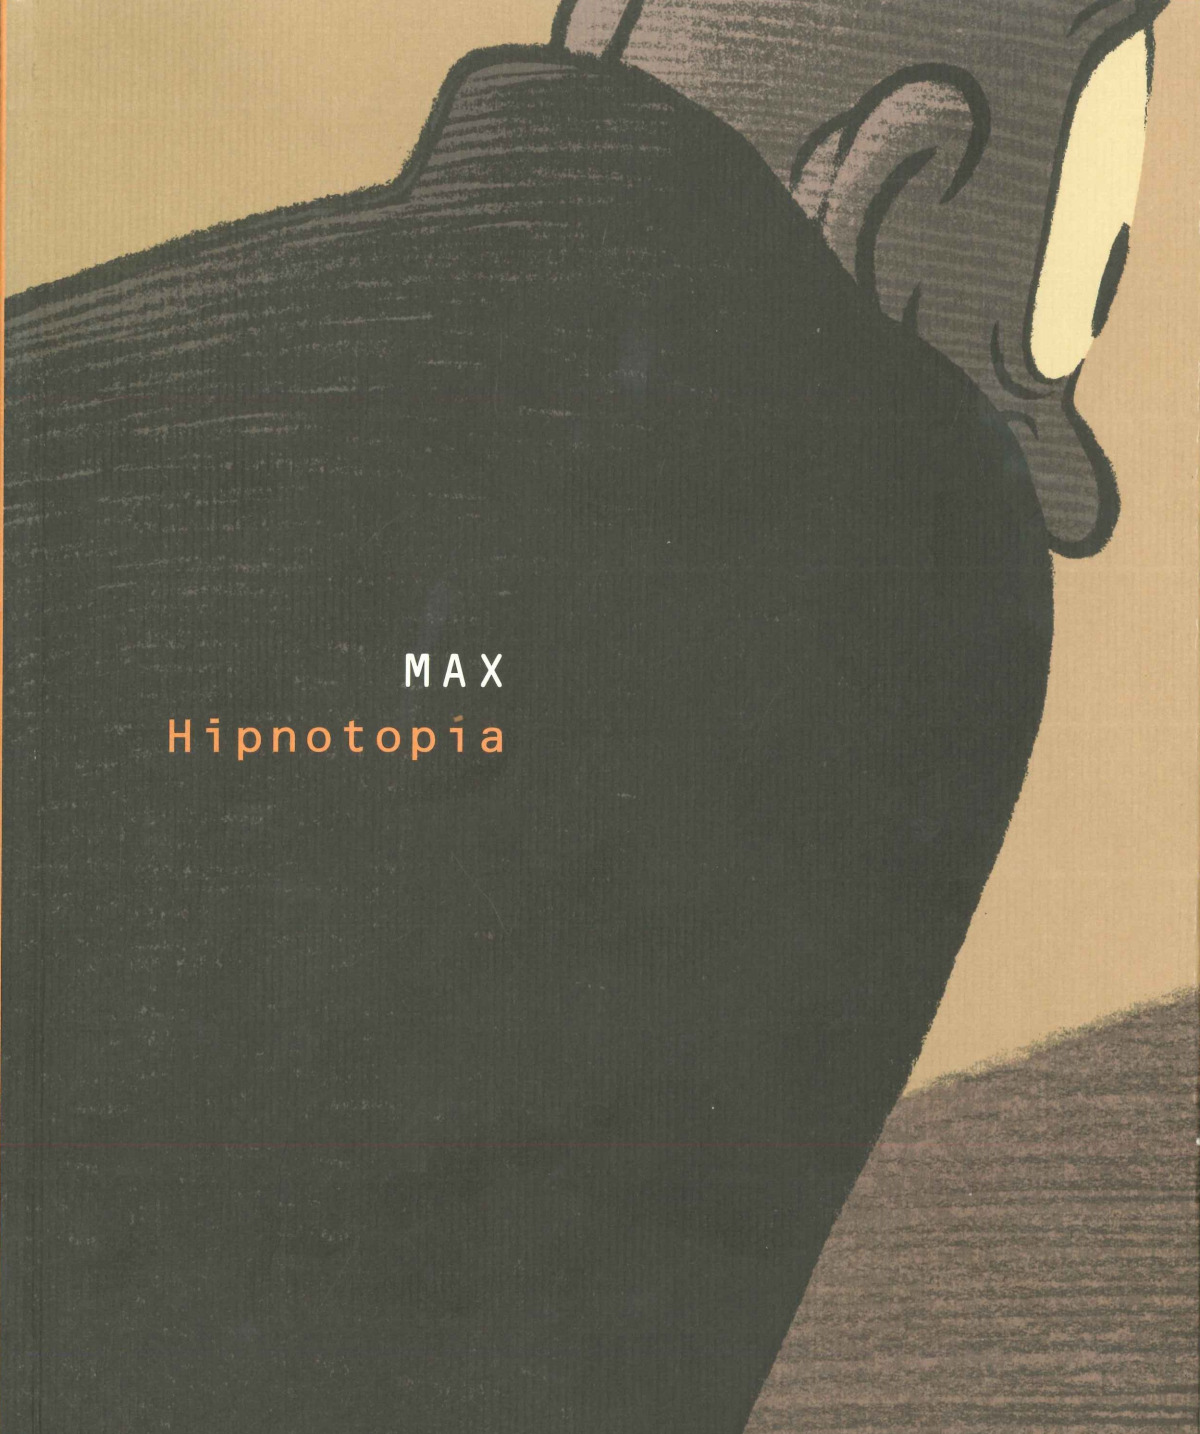 Max, Hipnotopía - Max